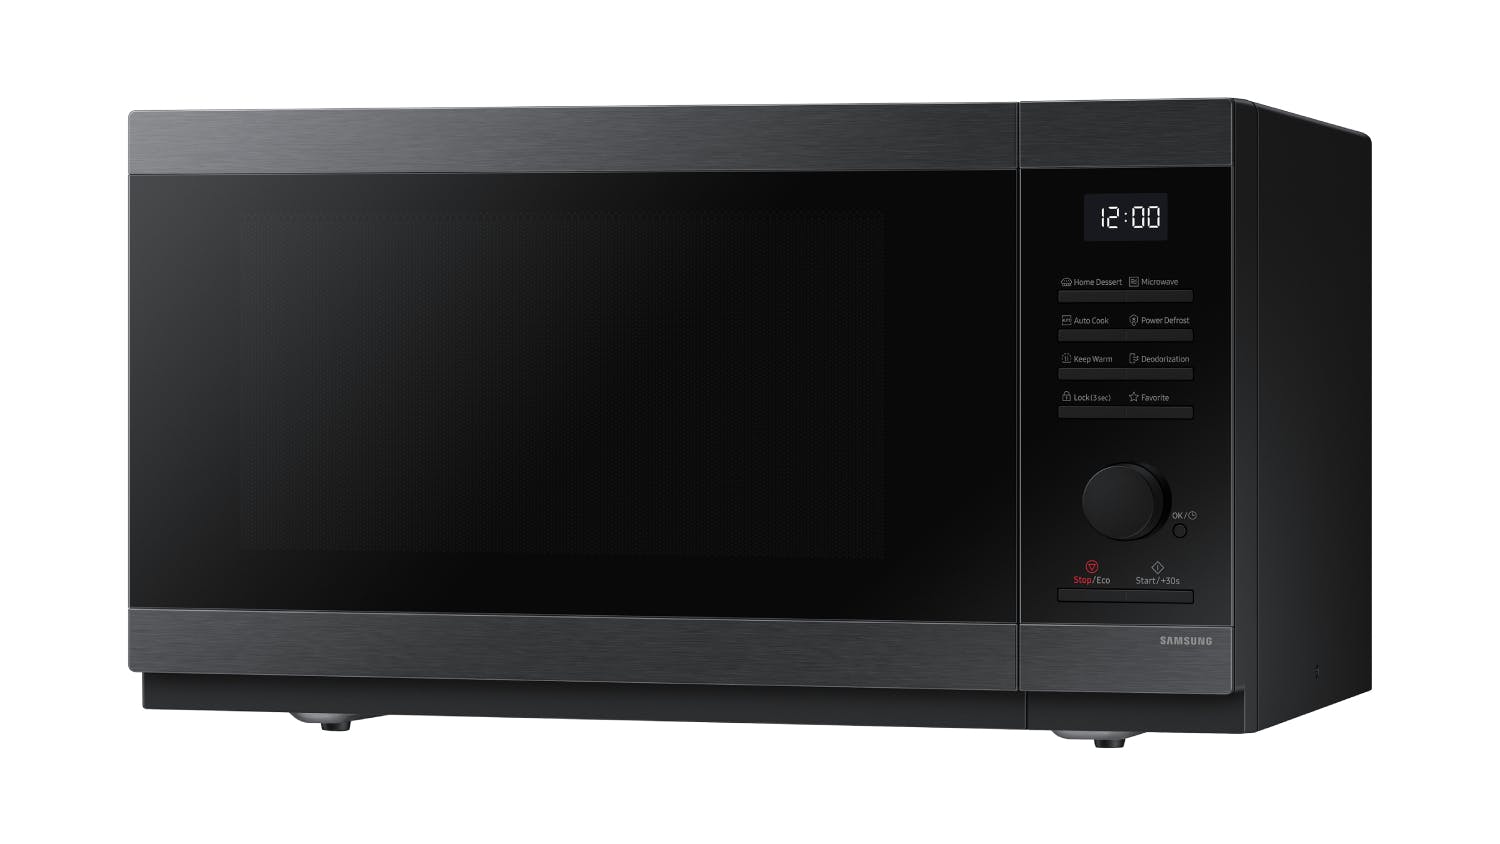 Samsung 40L 1000W Microwave - Black (MS40DG5504AGSA)